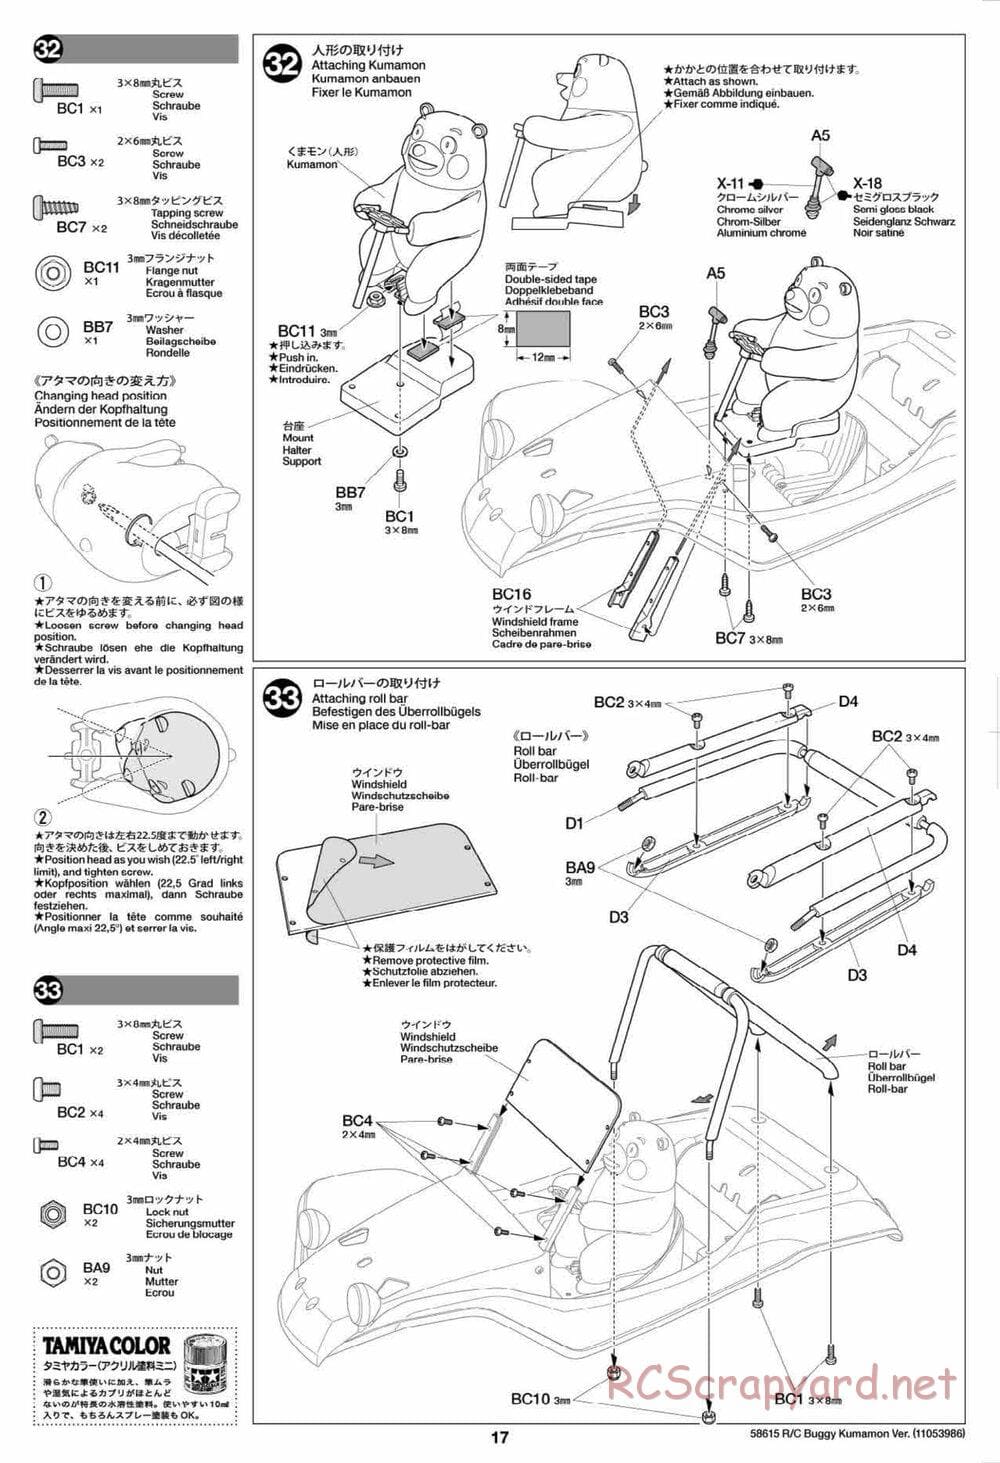 Tamiya - Buggy Kumamon Version Chassis - Manual - Page 17